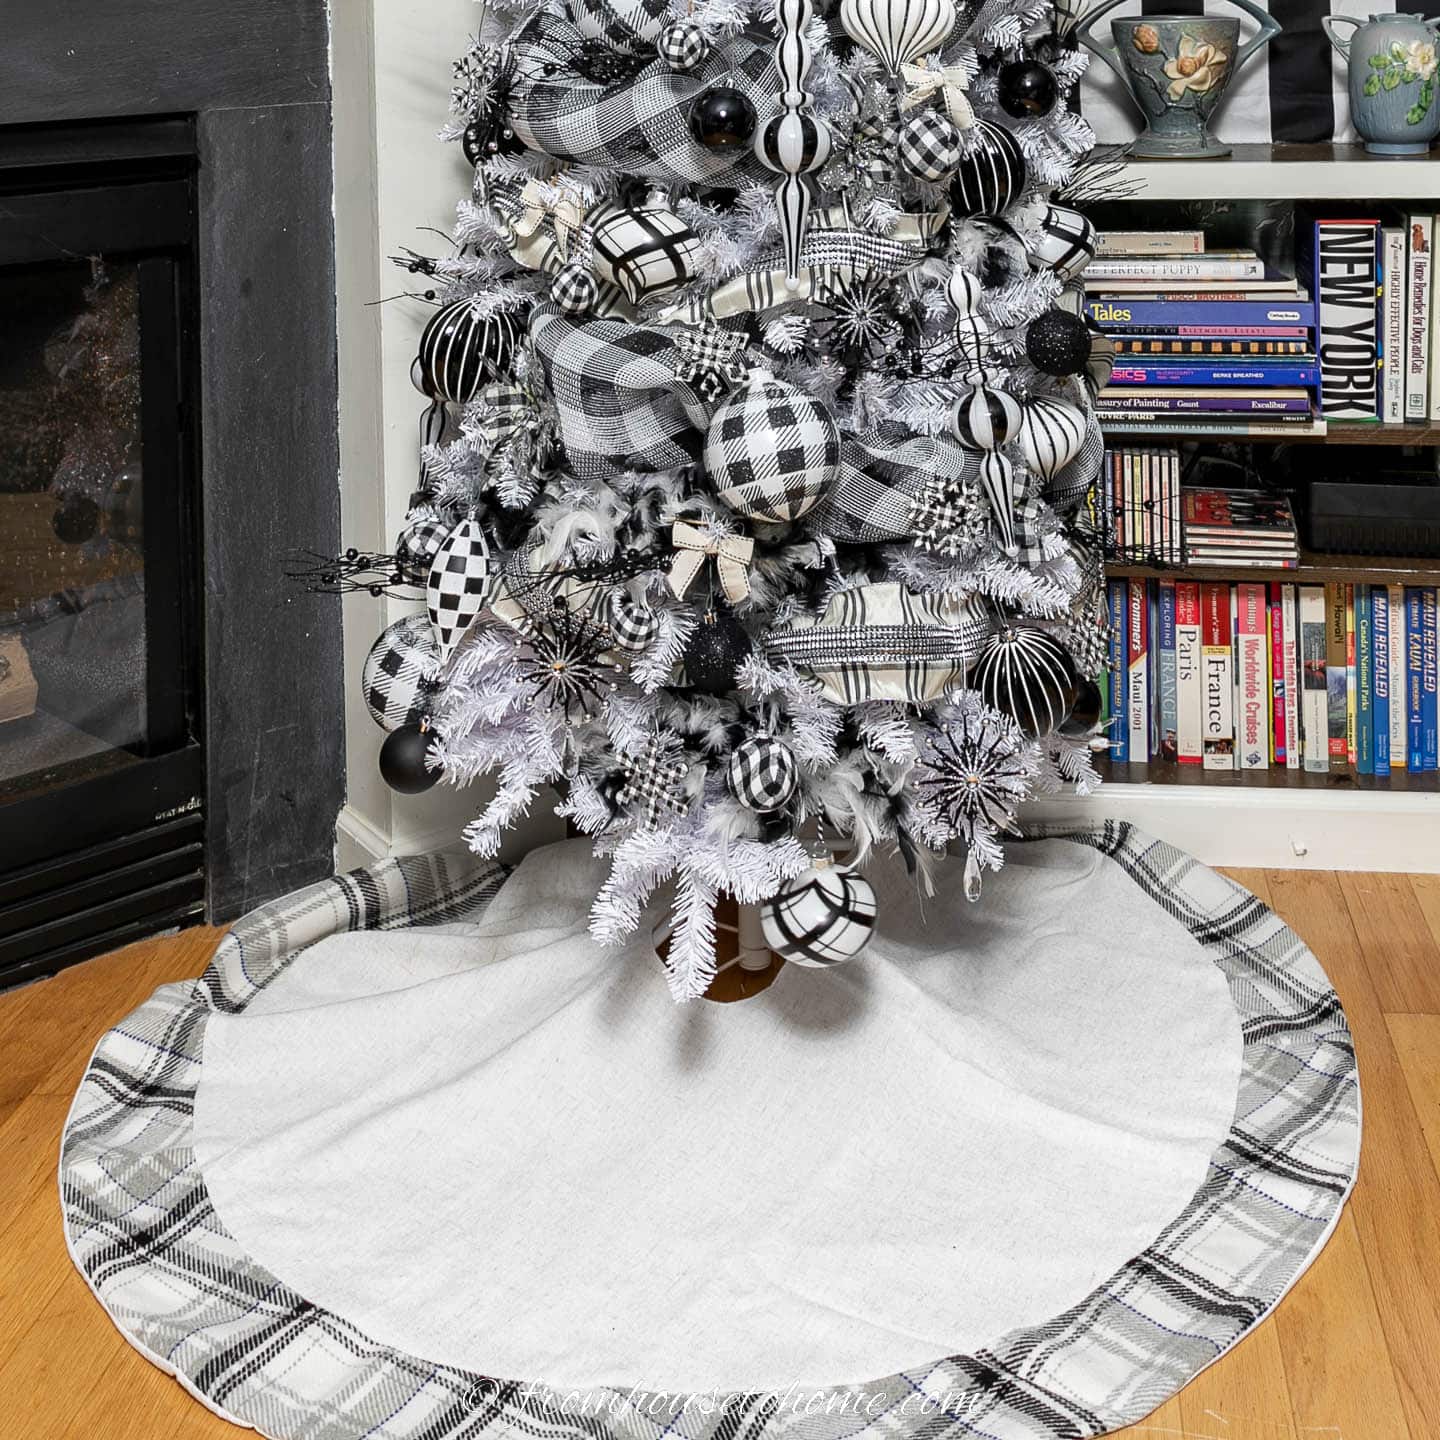 Black and white plaid tree skirt under a Christmas tree